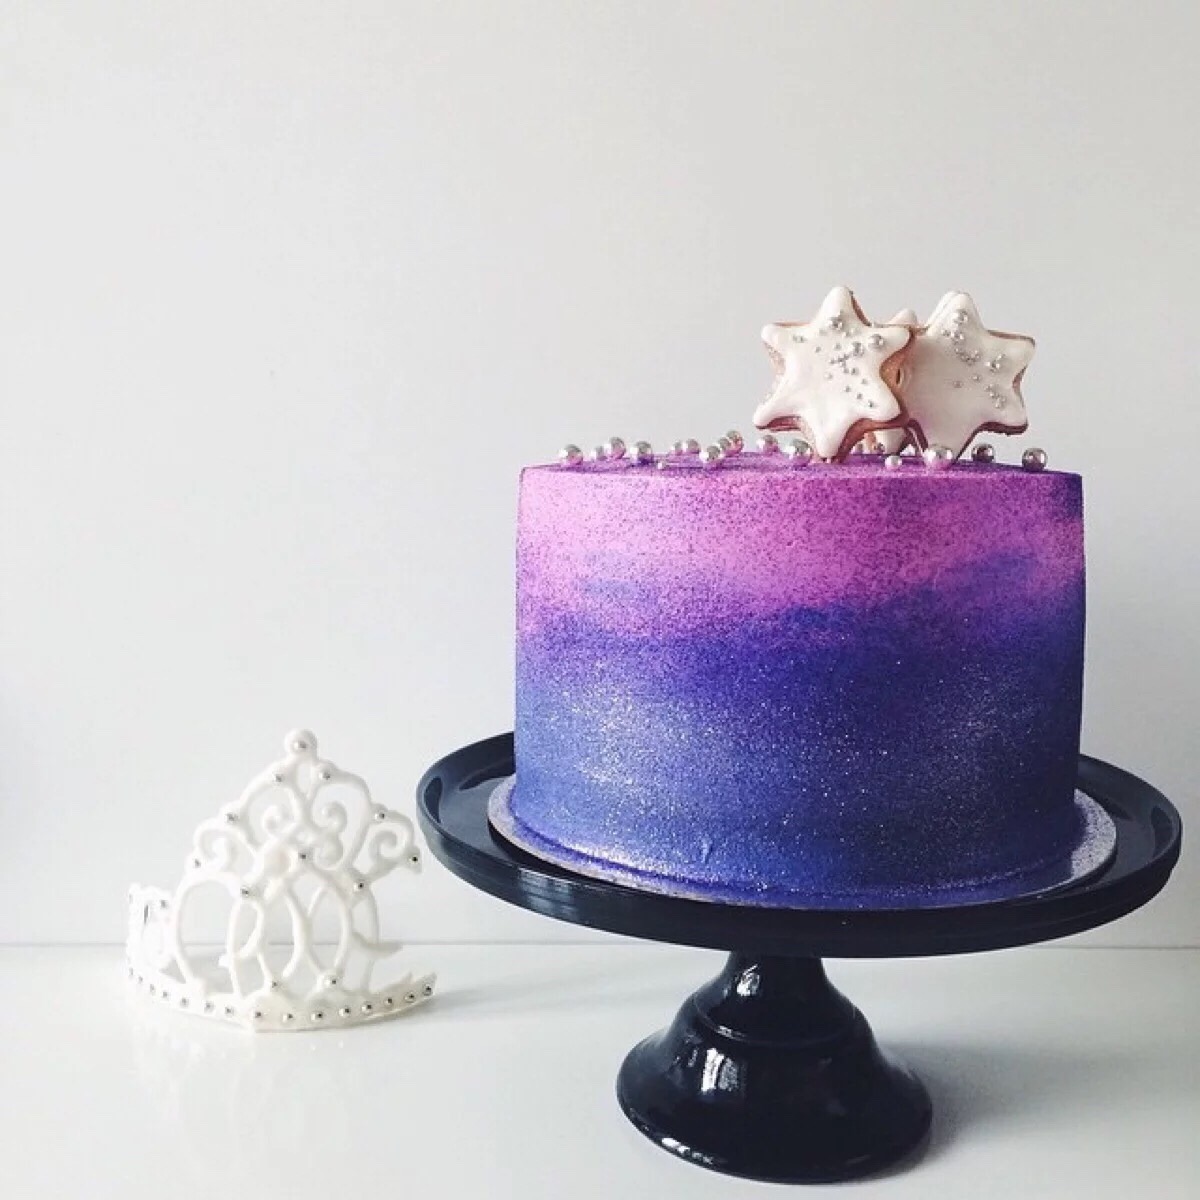 Bakels: 星空鏡面蛋糕淋面製作